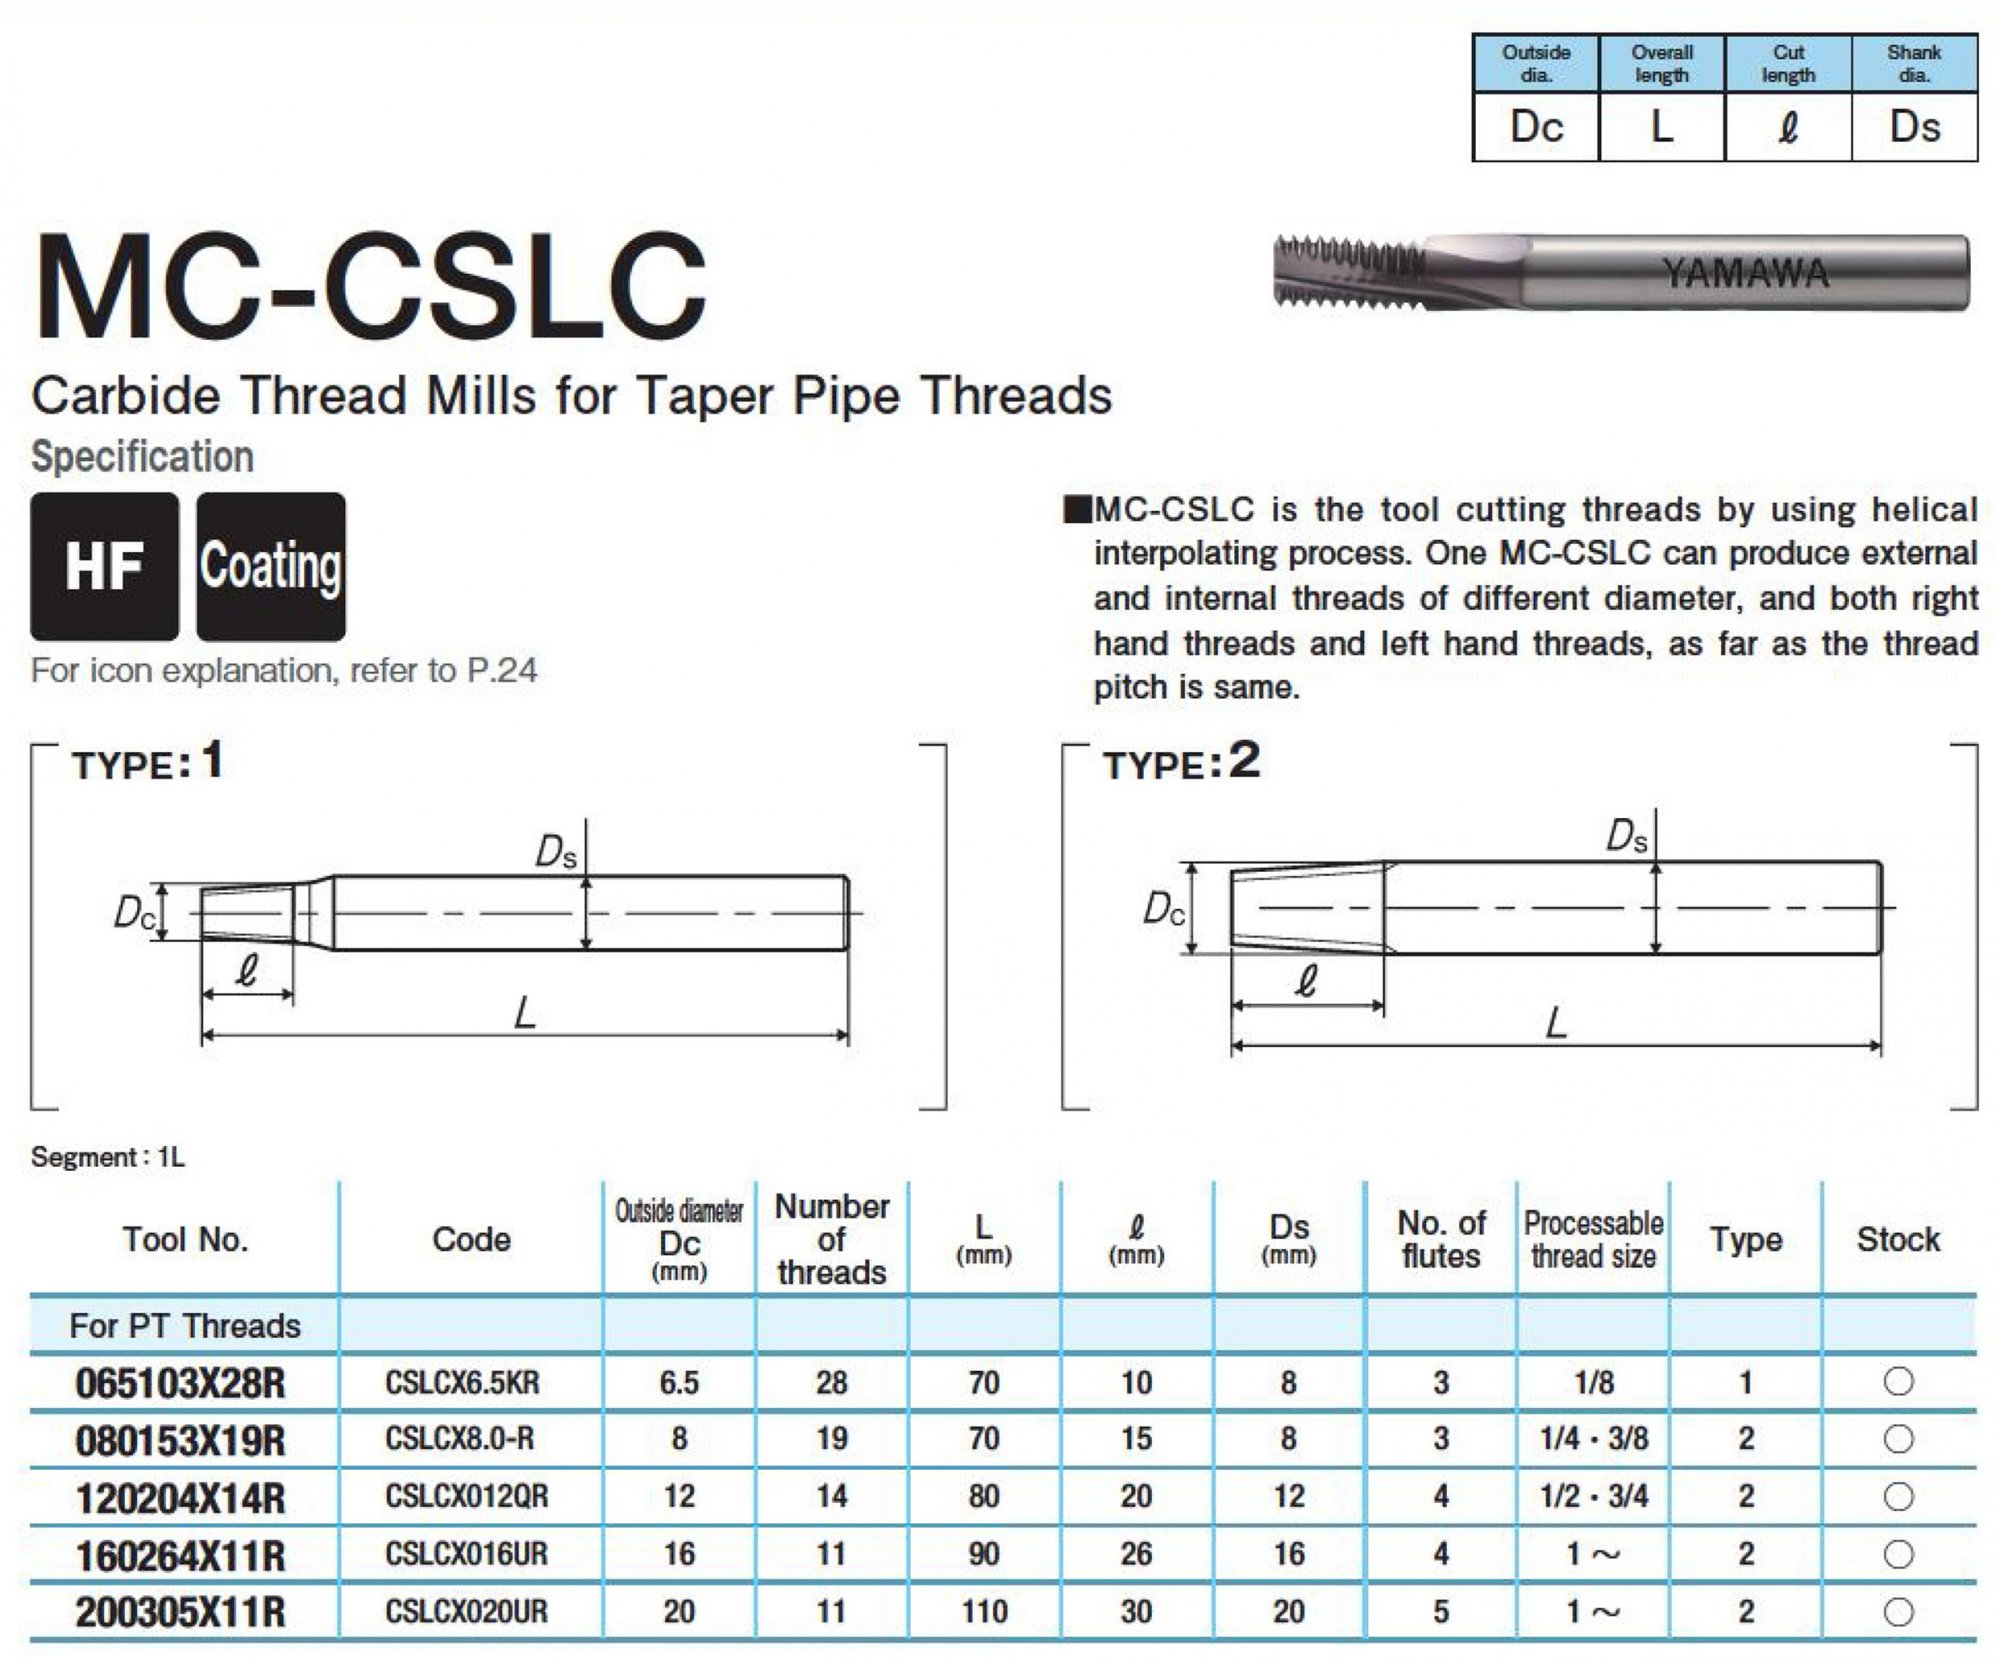 Carbide-Thread-Mills-for-Taper-Pipe-Threads-MC-CSLC-02